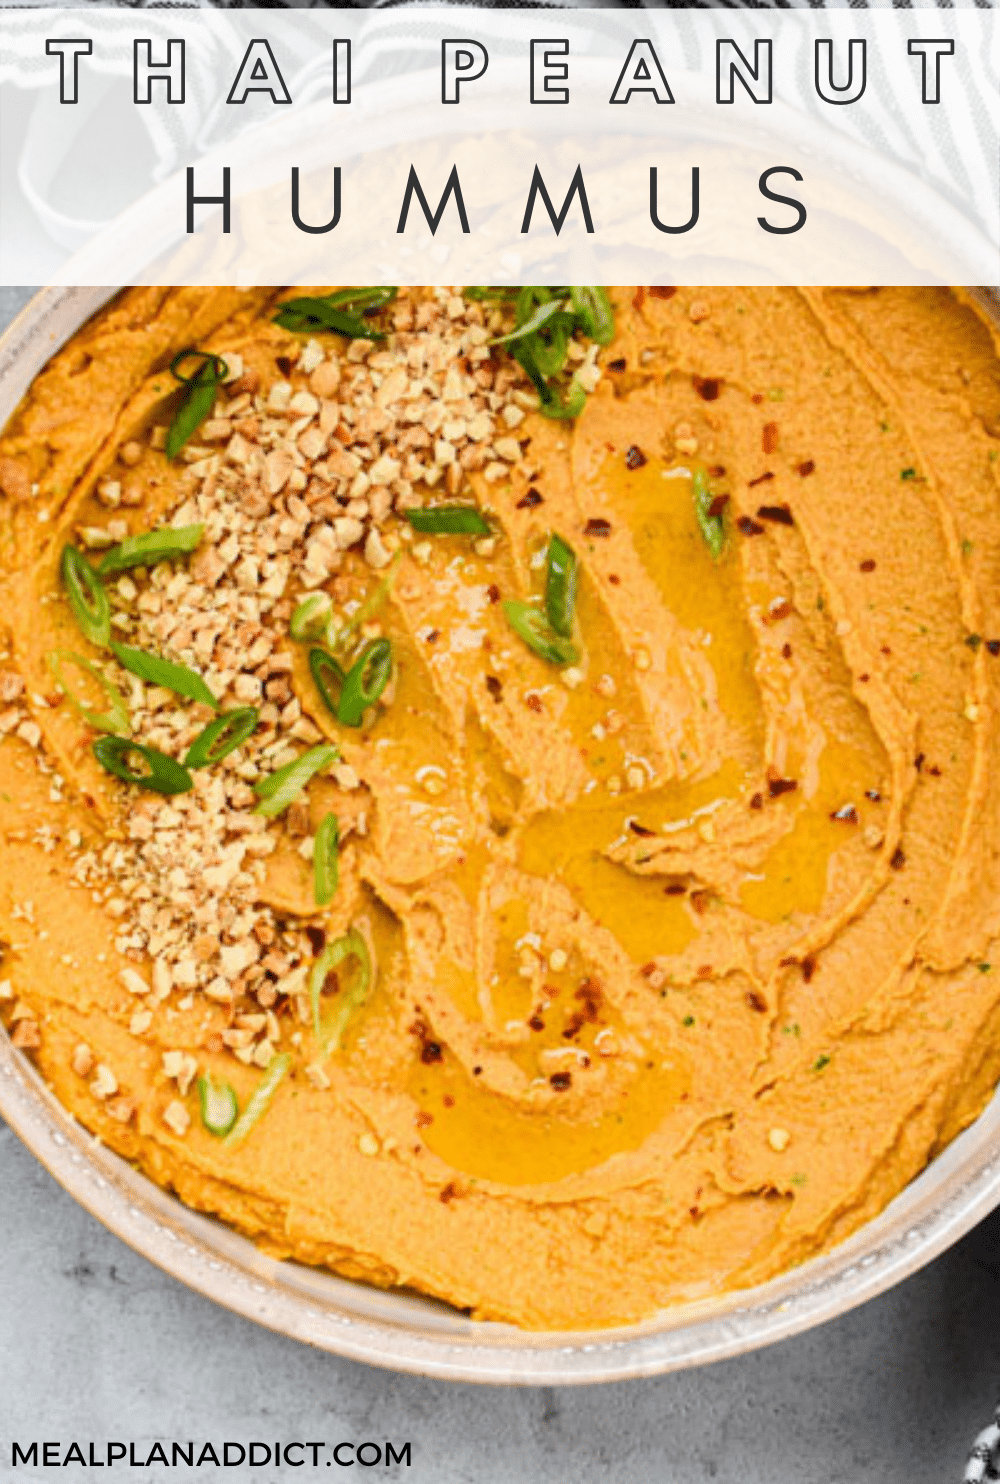 Hummus pin for Pinterest